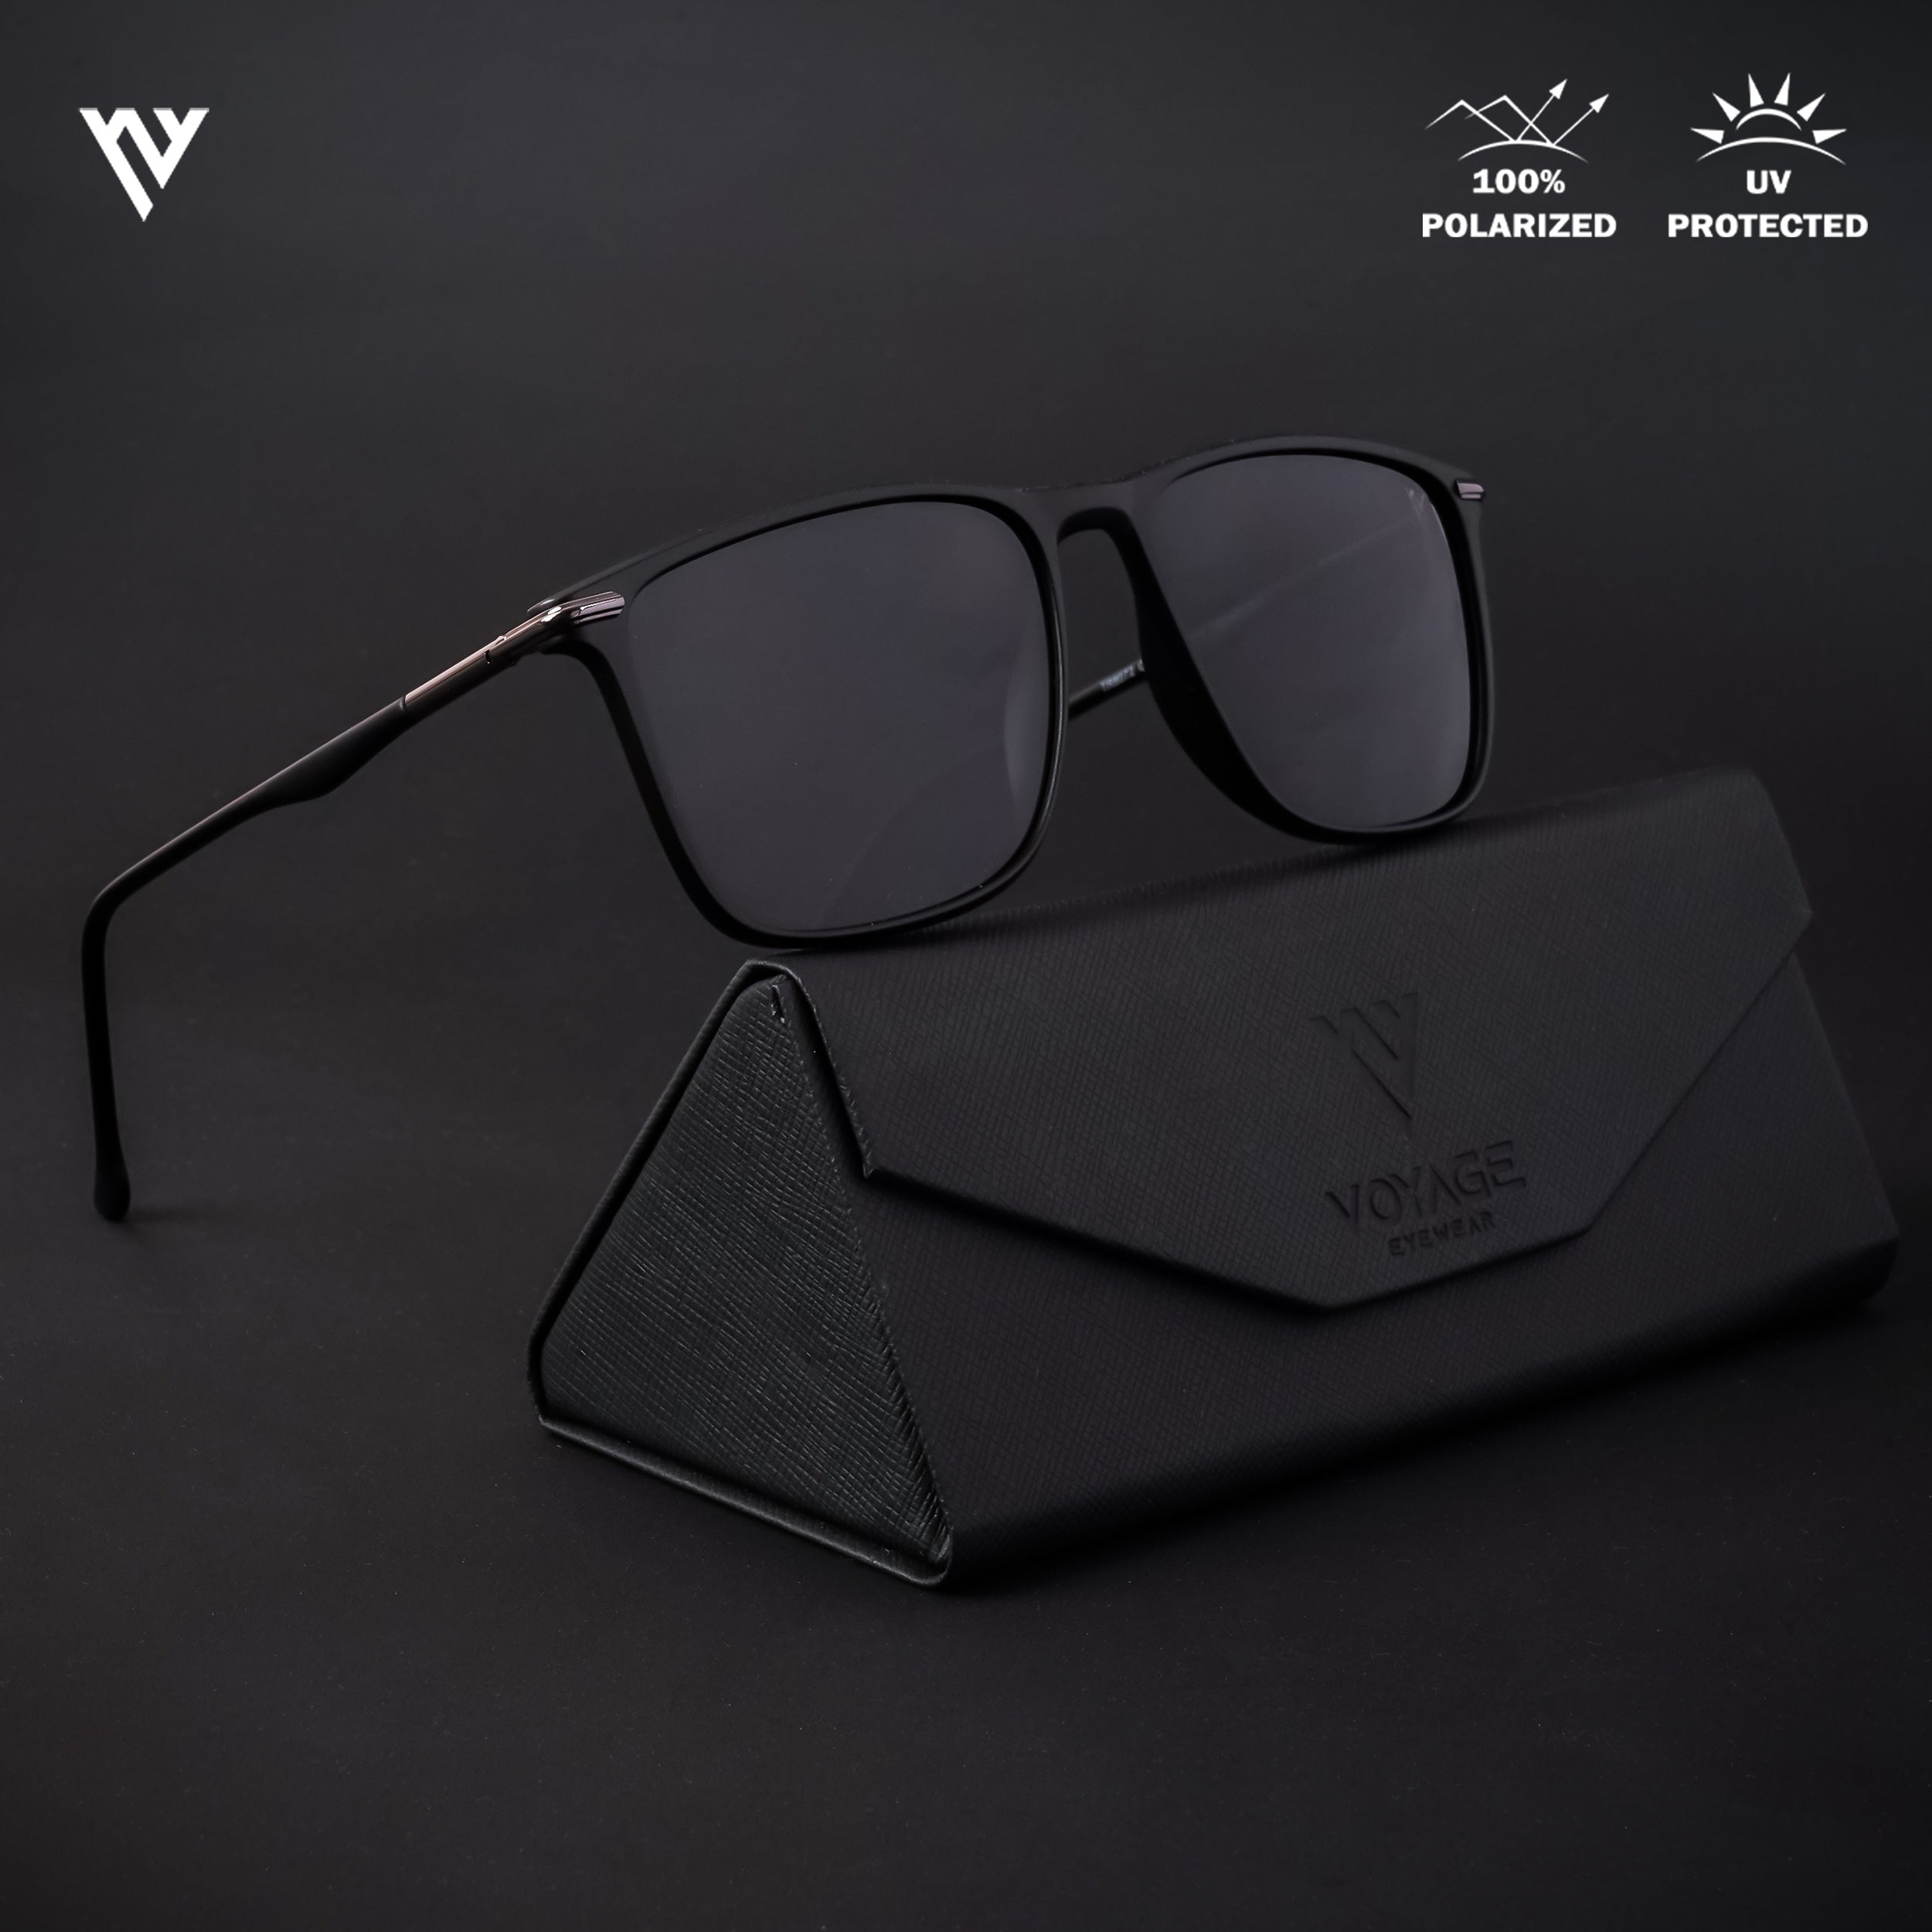 Voyage Exclusive Matt Black Polarized Wayfarer Sunglasses for Men & Women - PMG4300